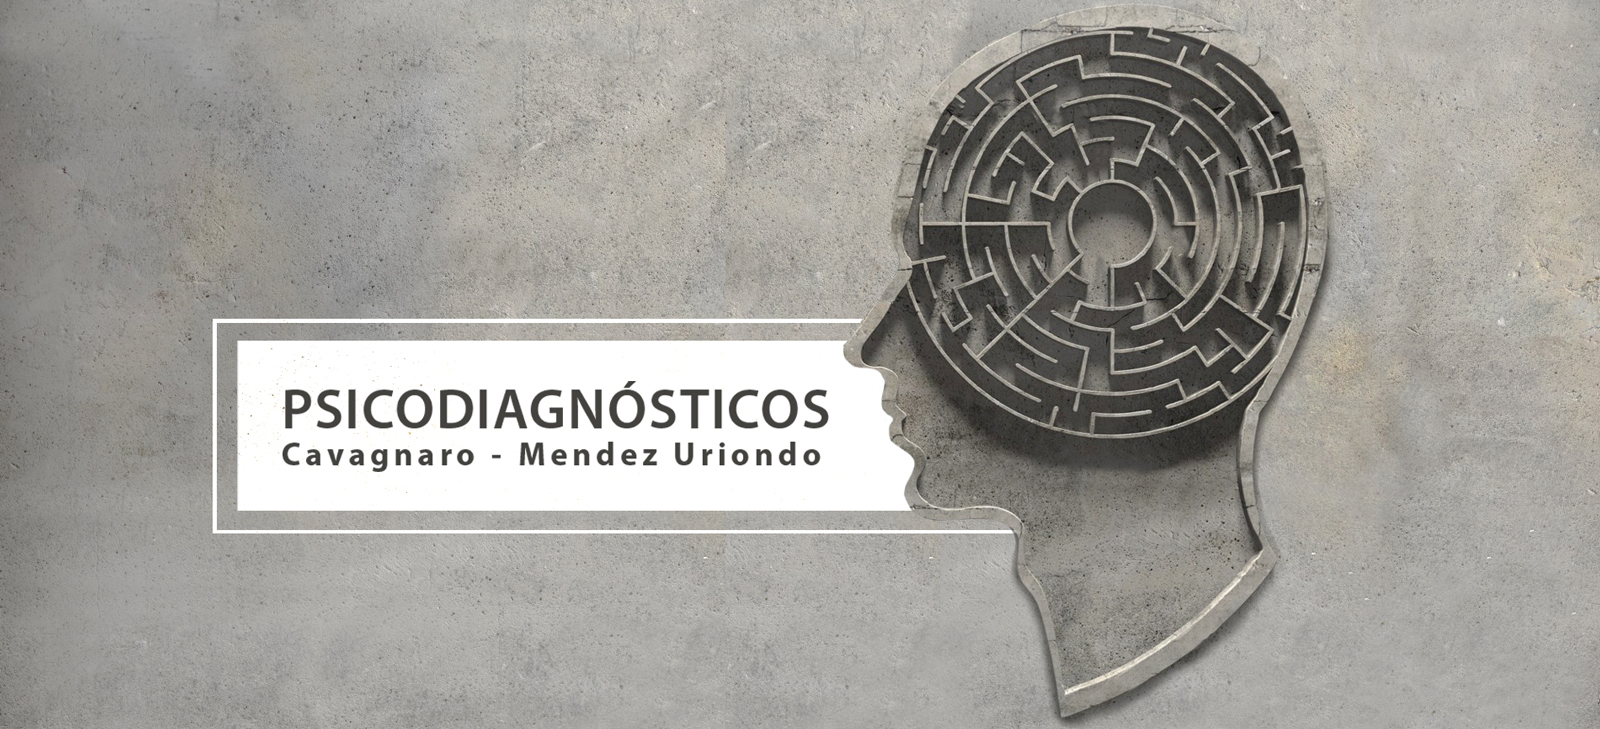 Psicodiagnósticos | Cavagnaro - Mendez Uriondo